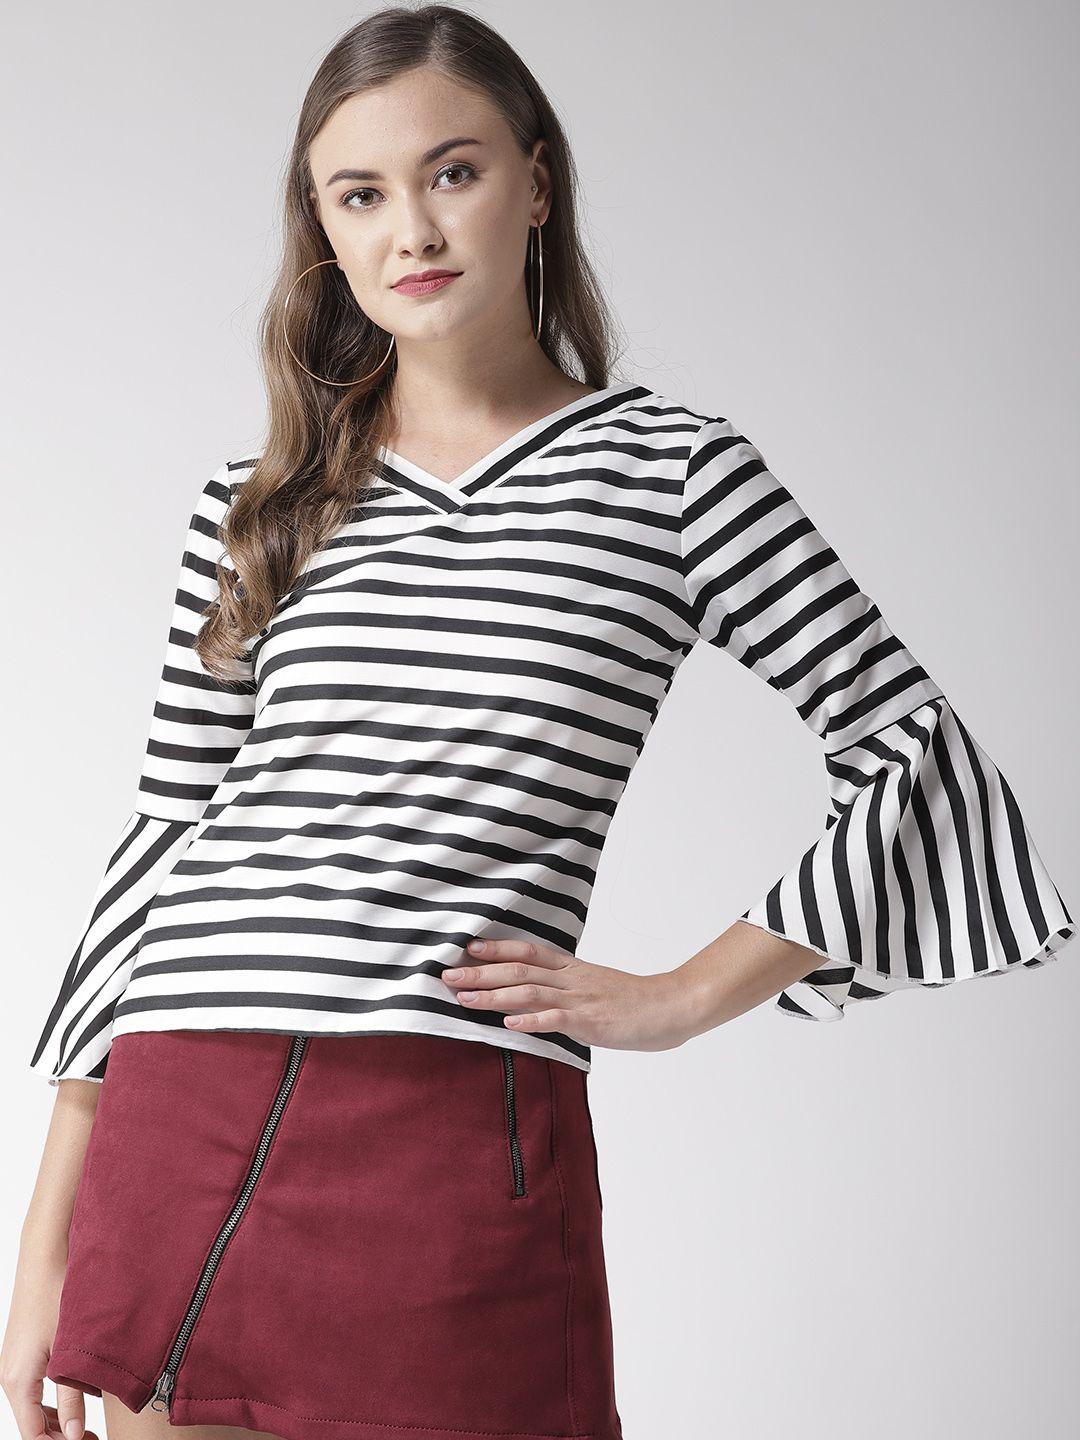 style quotient women white & black striped top